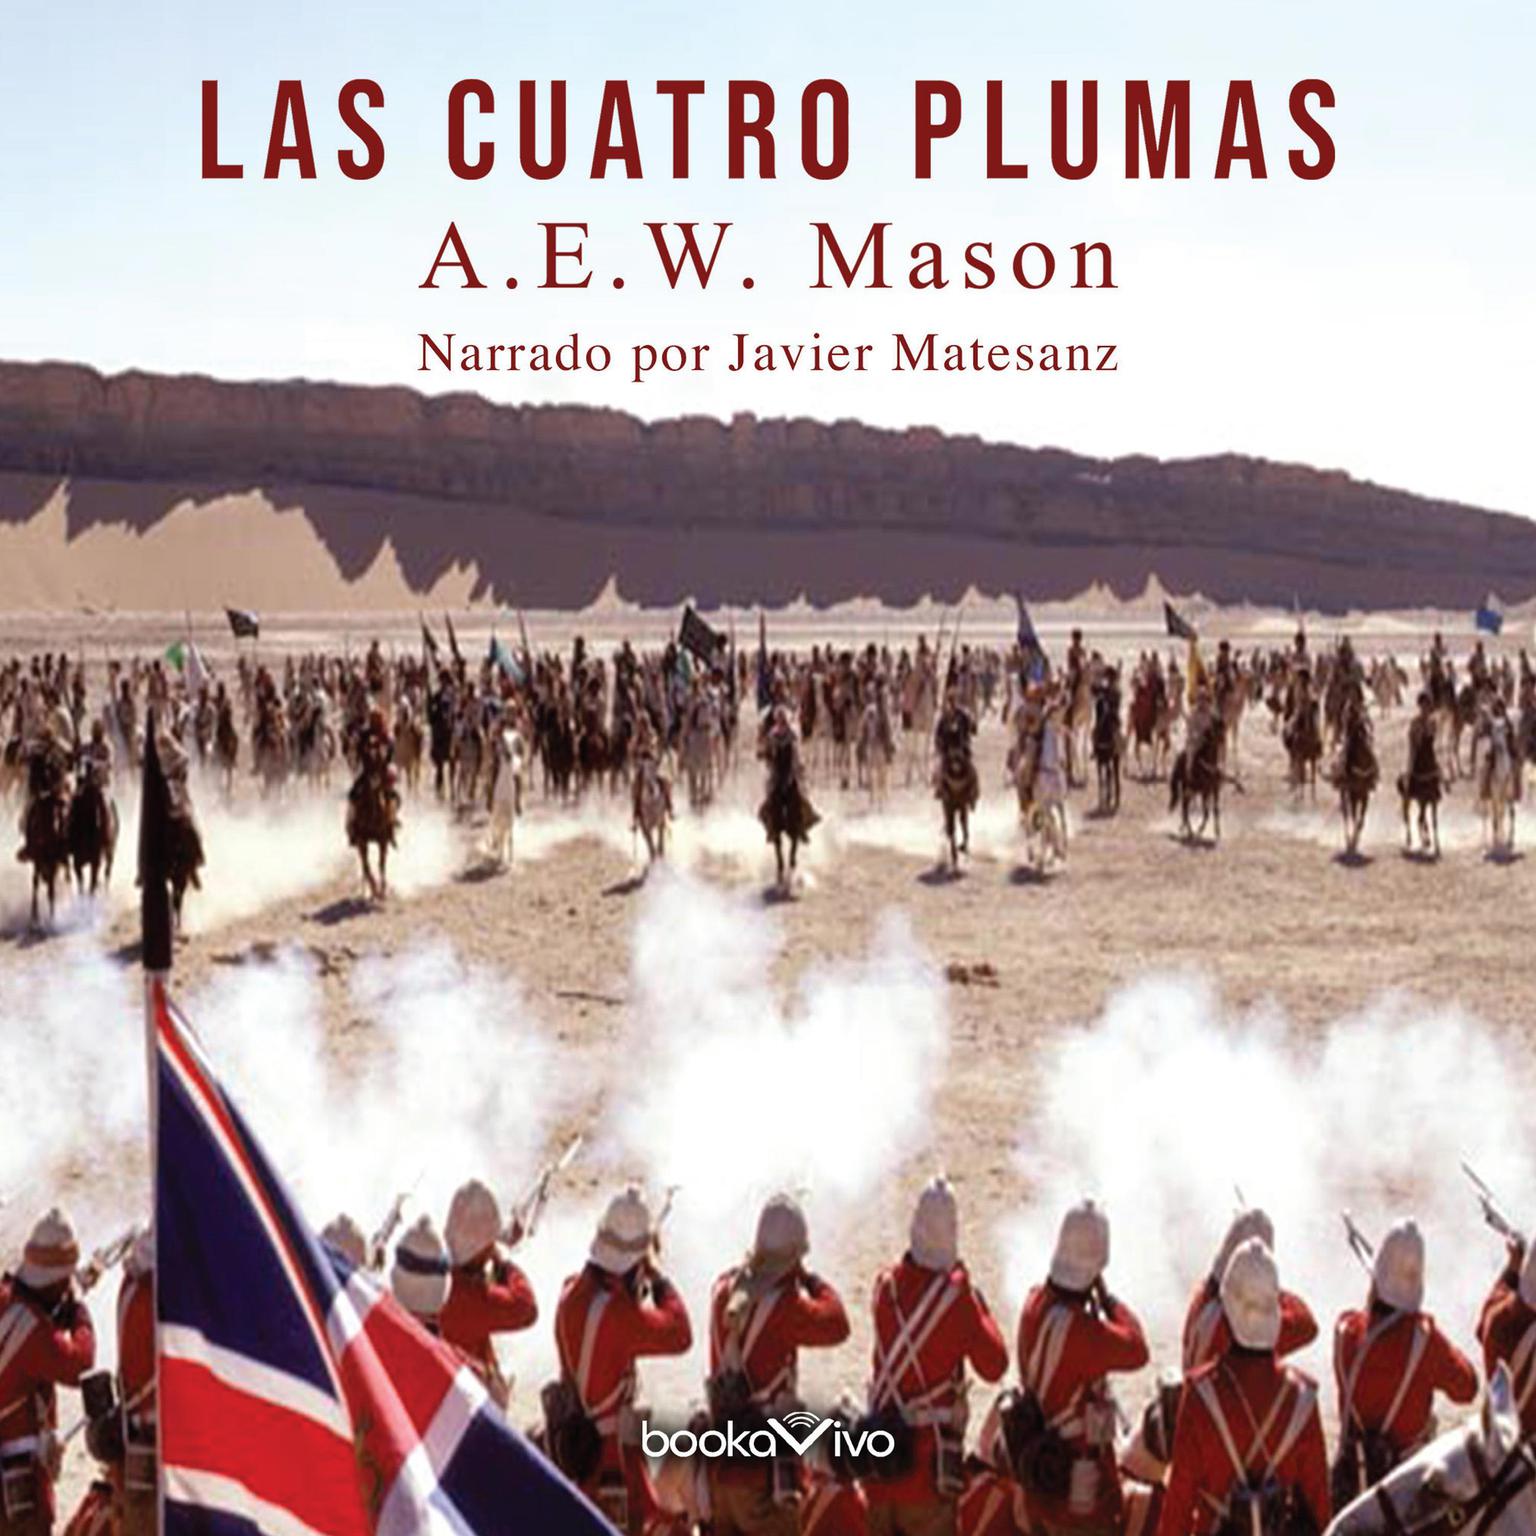 Las cuatro plumas Audiobook, by A. E. W. Mason